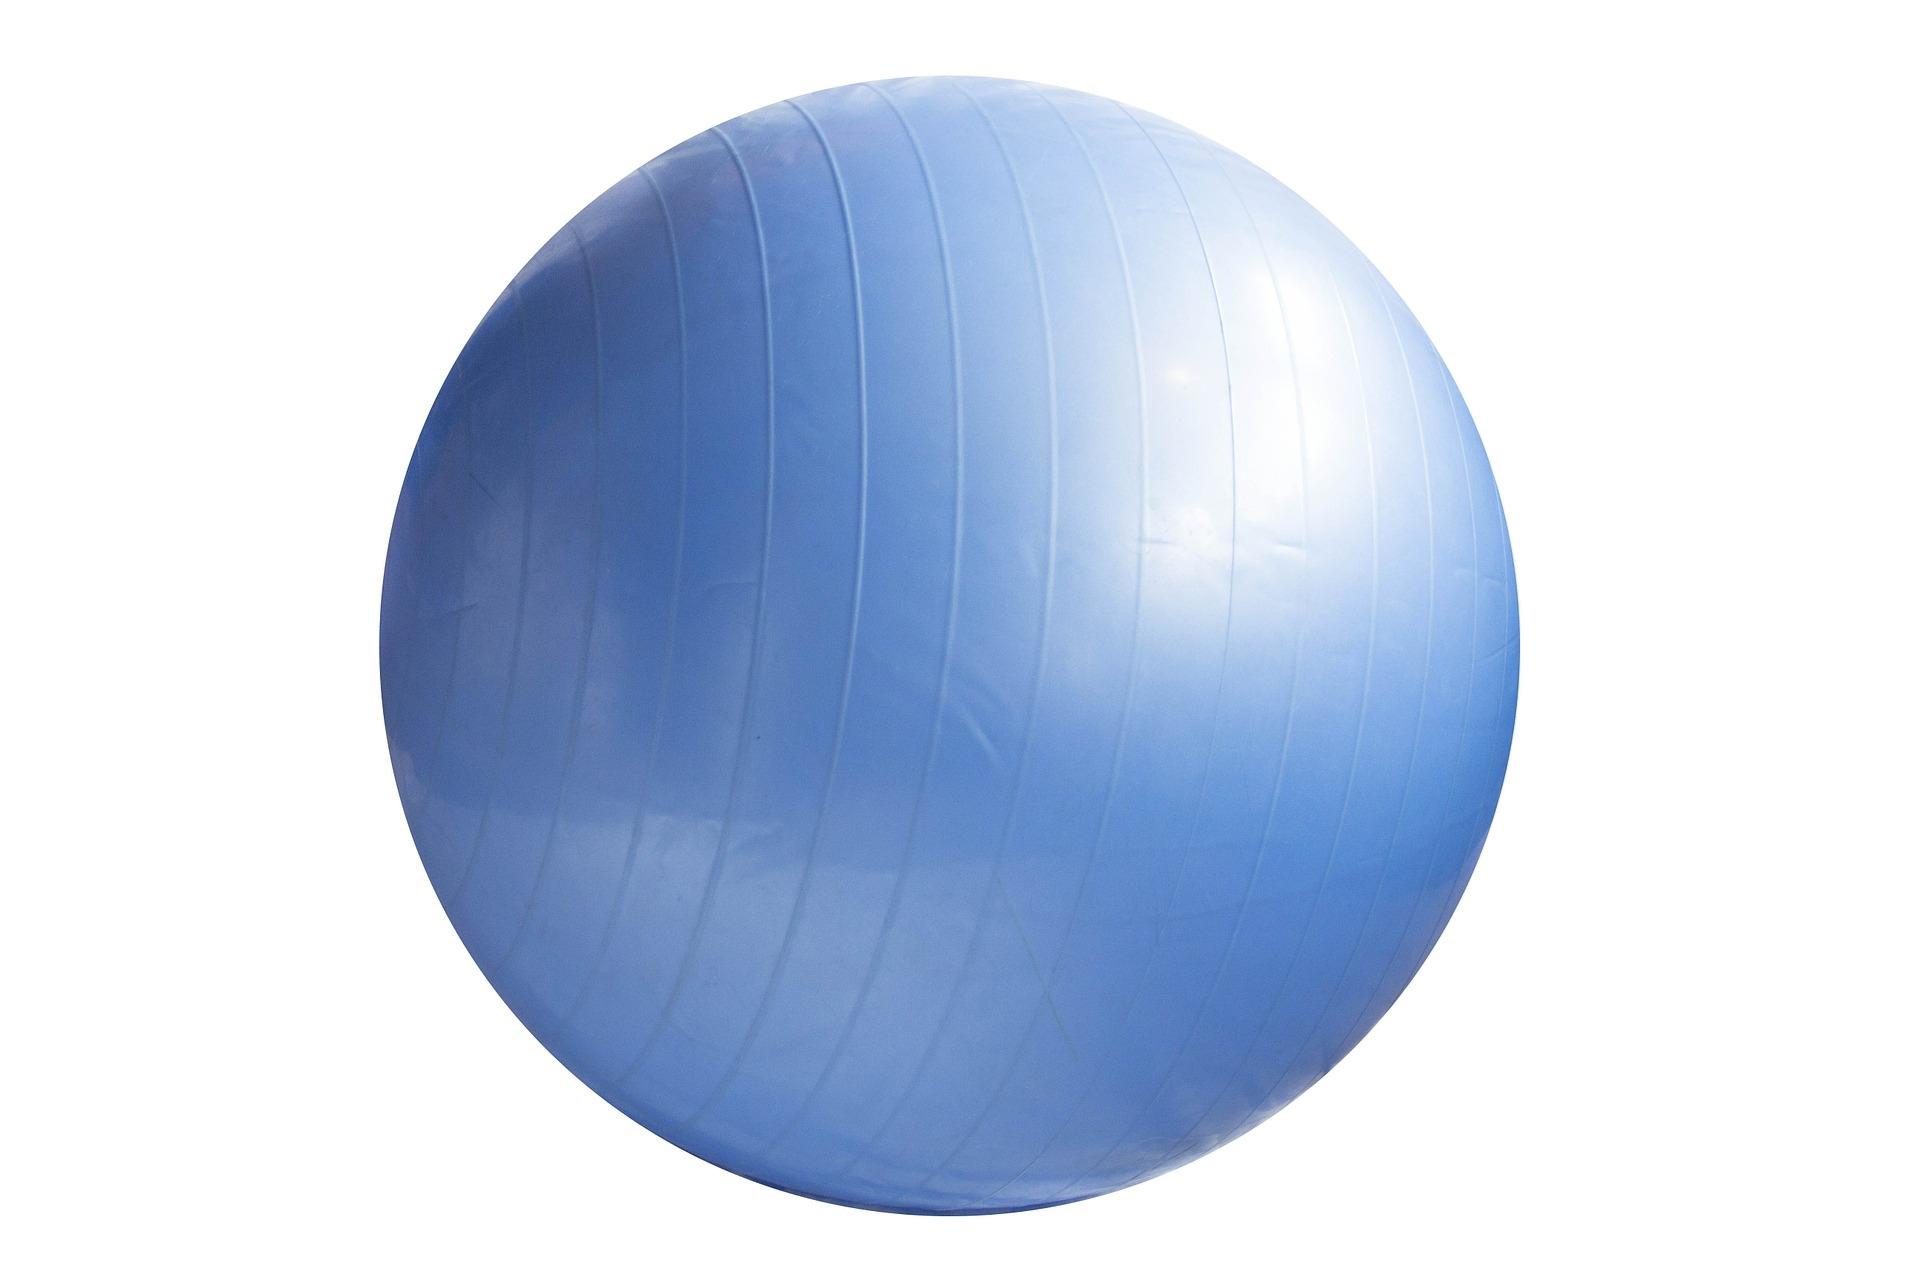 a blue ball